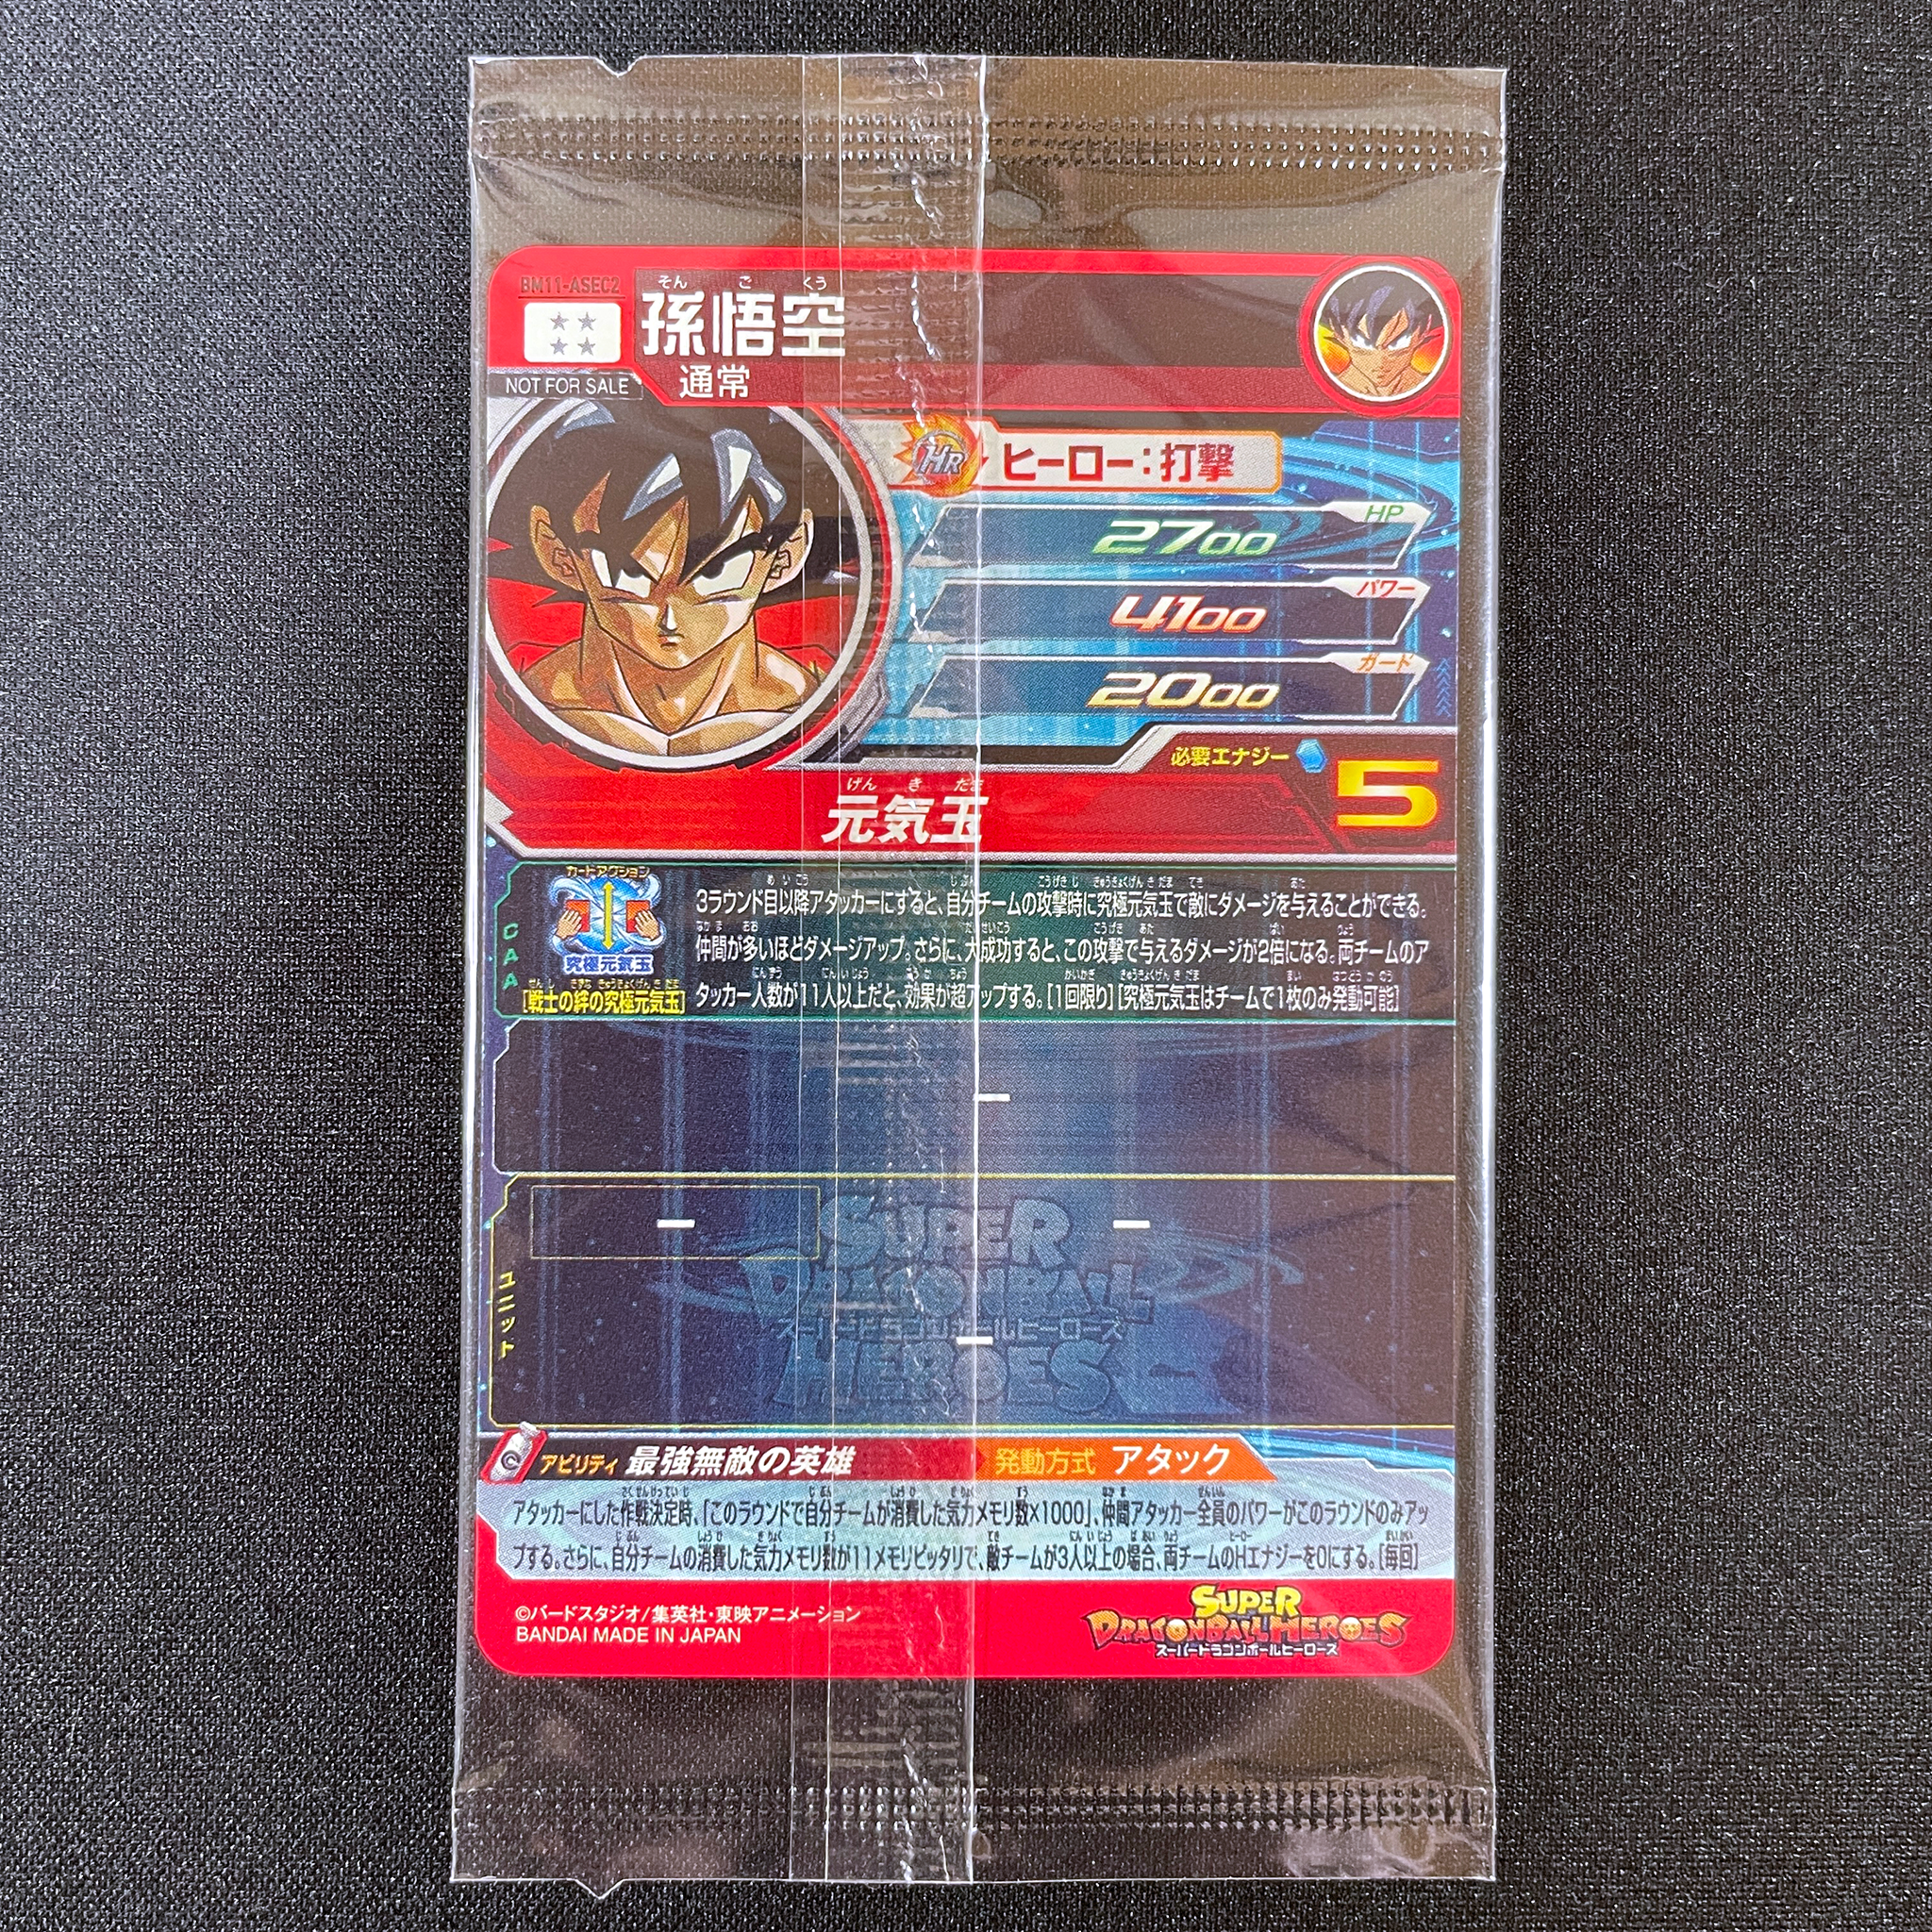 SUPER DRAGON BALL HEROES BM11-ASEC2 in blister Secret card  Son Goku